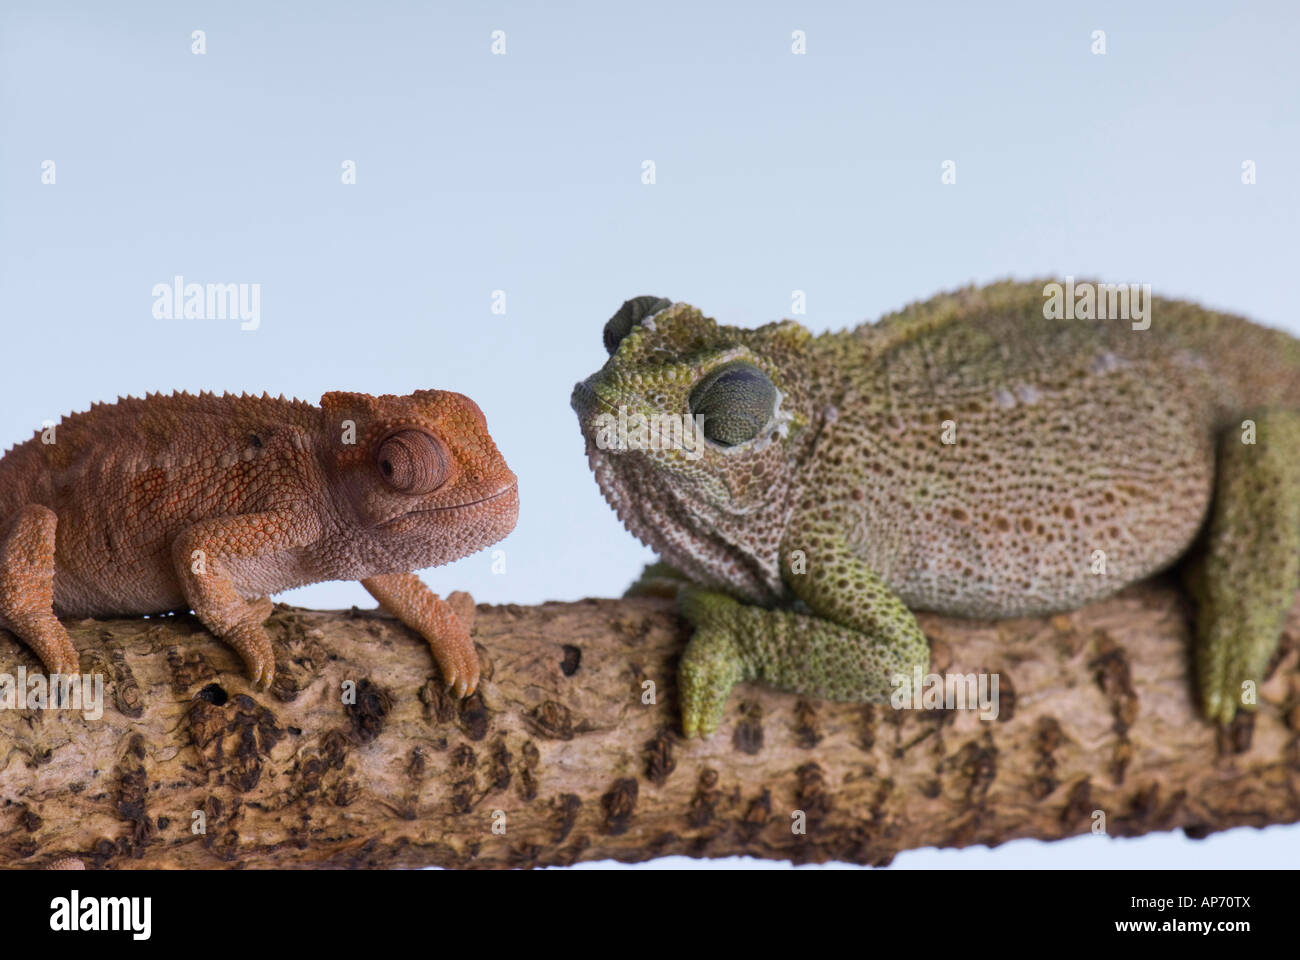 two chameleons on branch Stock Photo